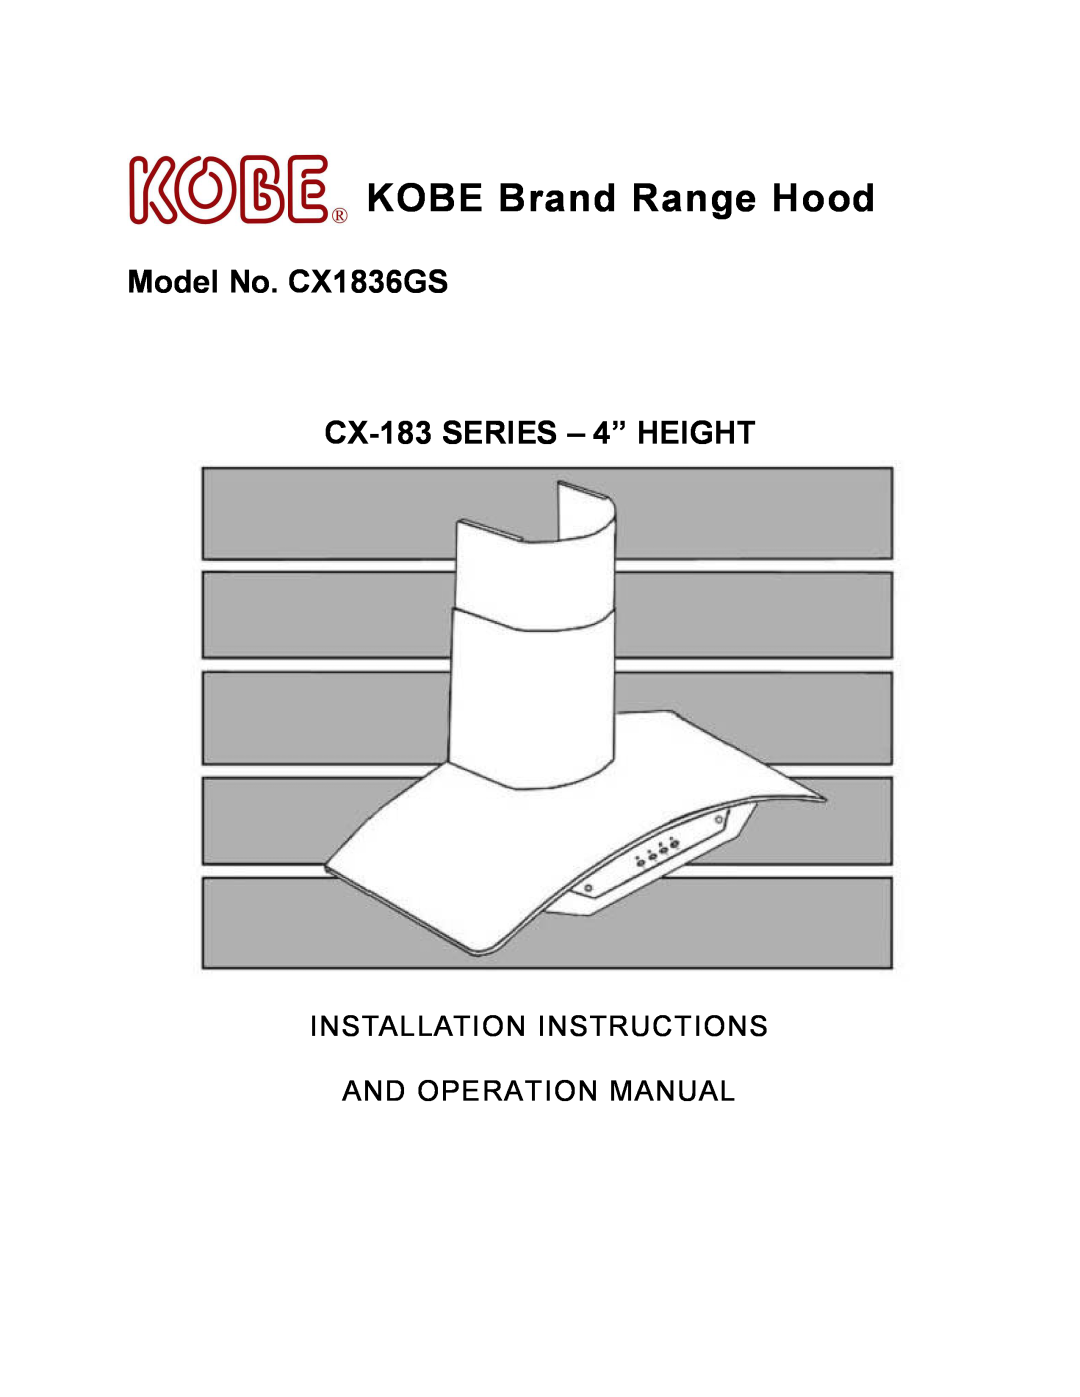 Kobe Range Hoods installation instructions KOBE Brand Range Hood, Model No. CX1836GS CX-183 SERIES 4 HEIGHT 